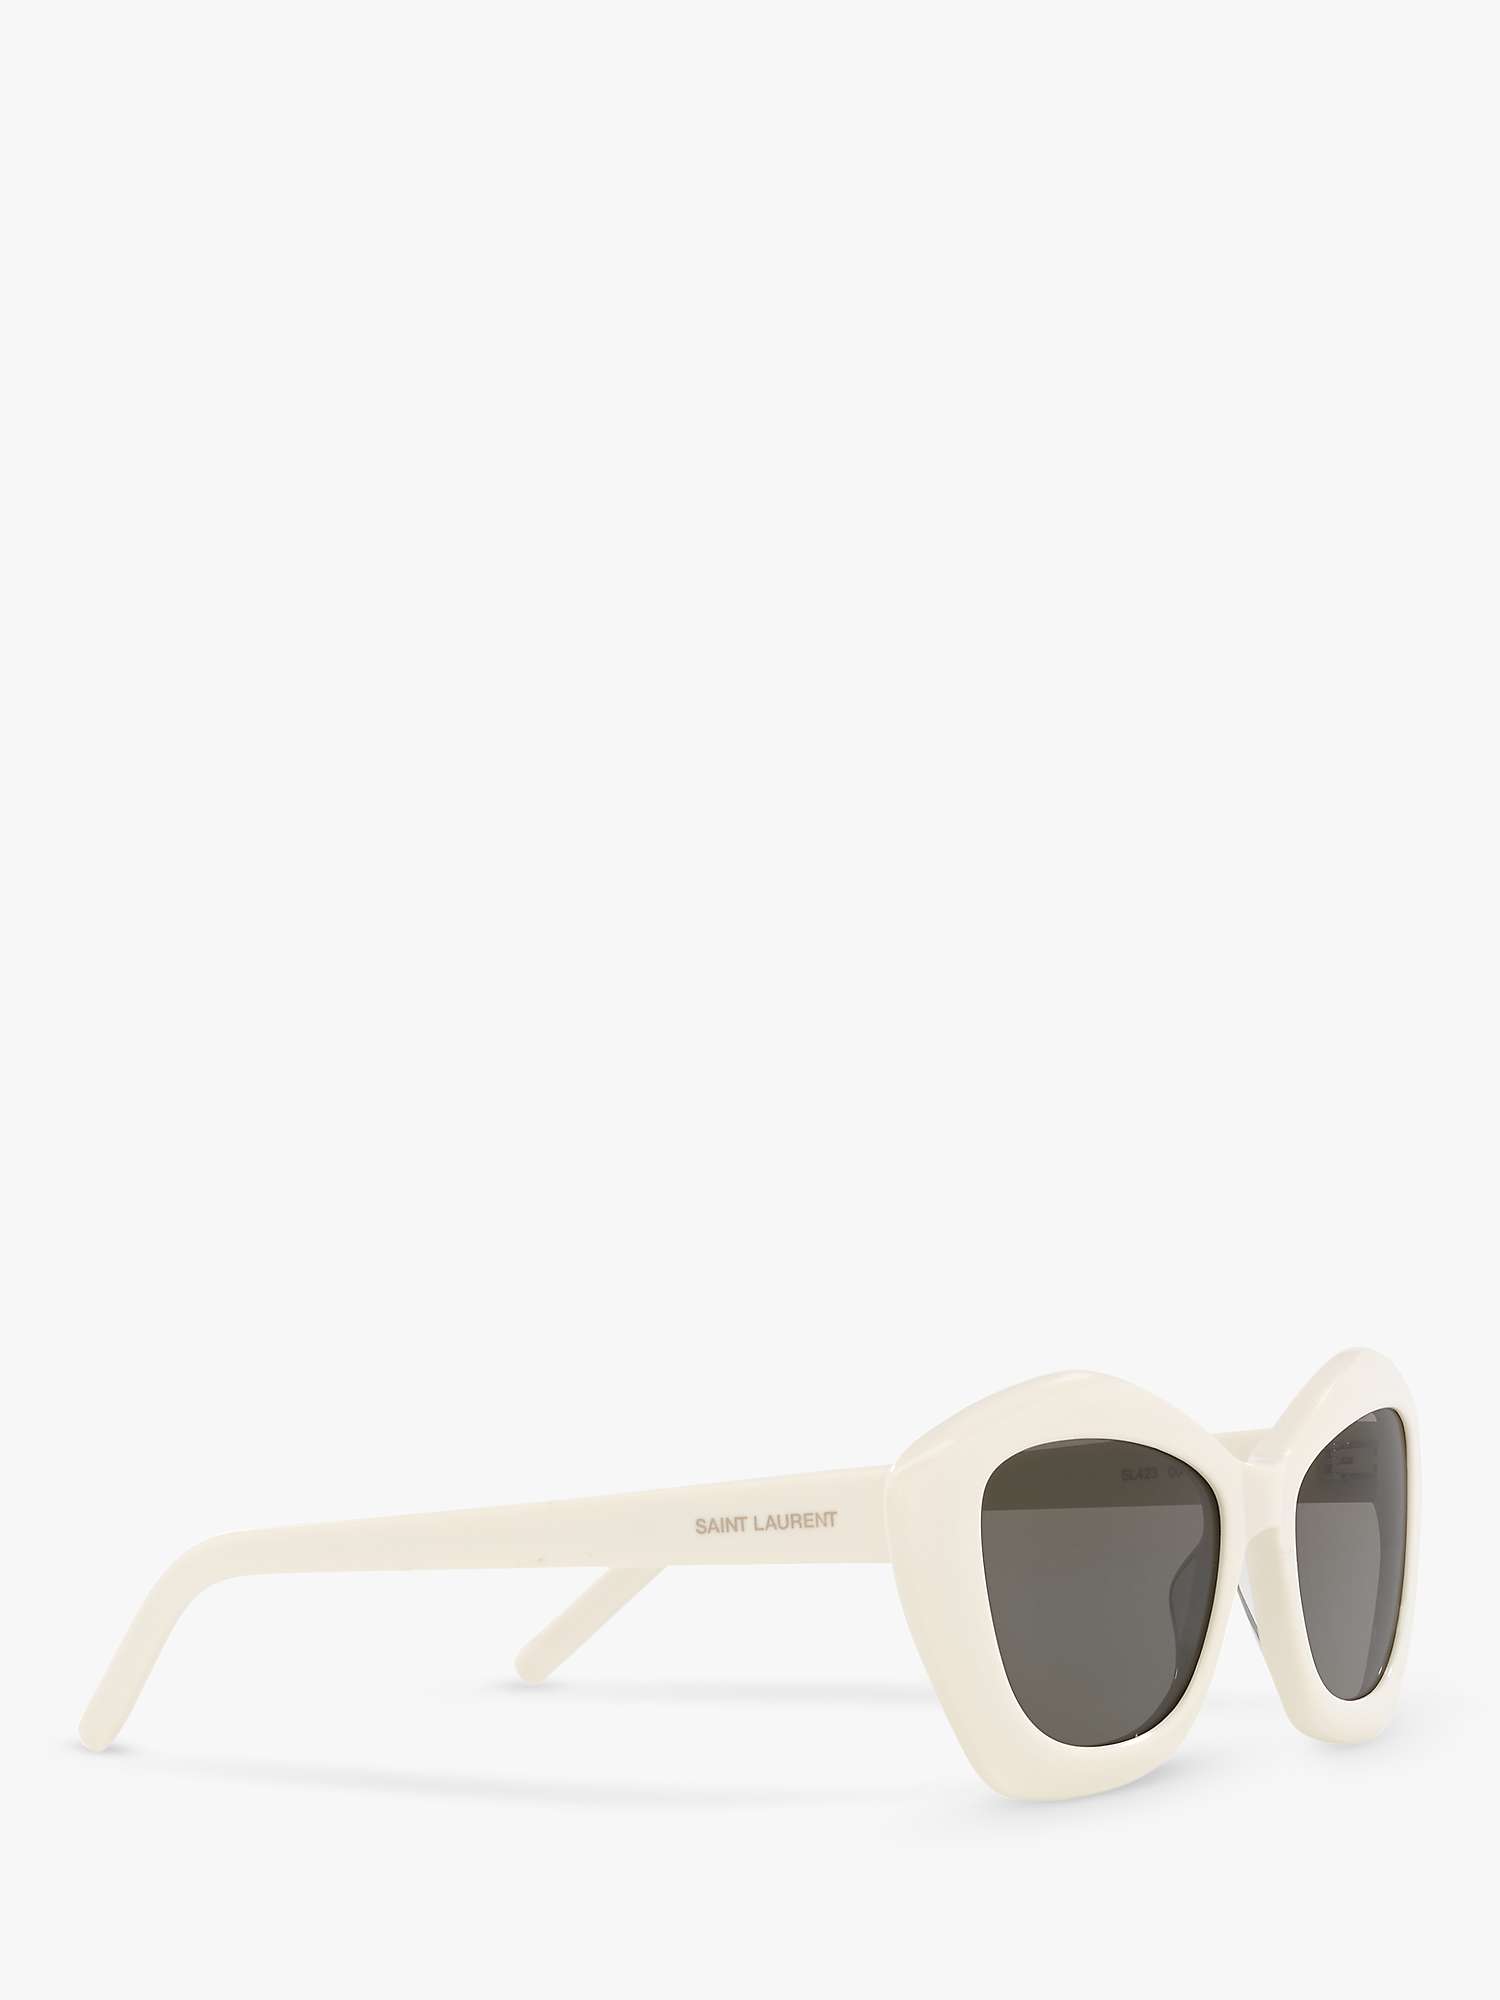 saint laurent sunglasses white